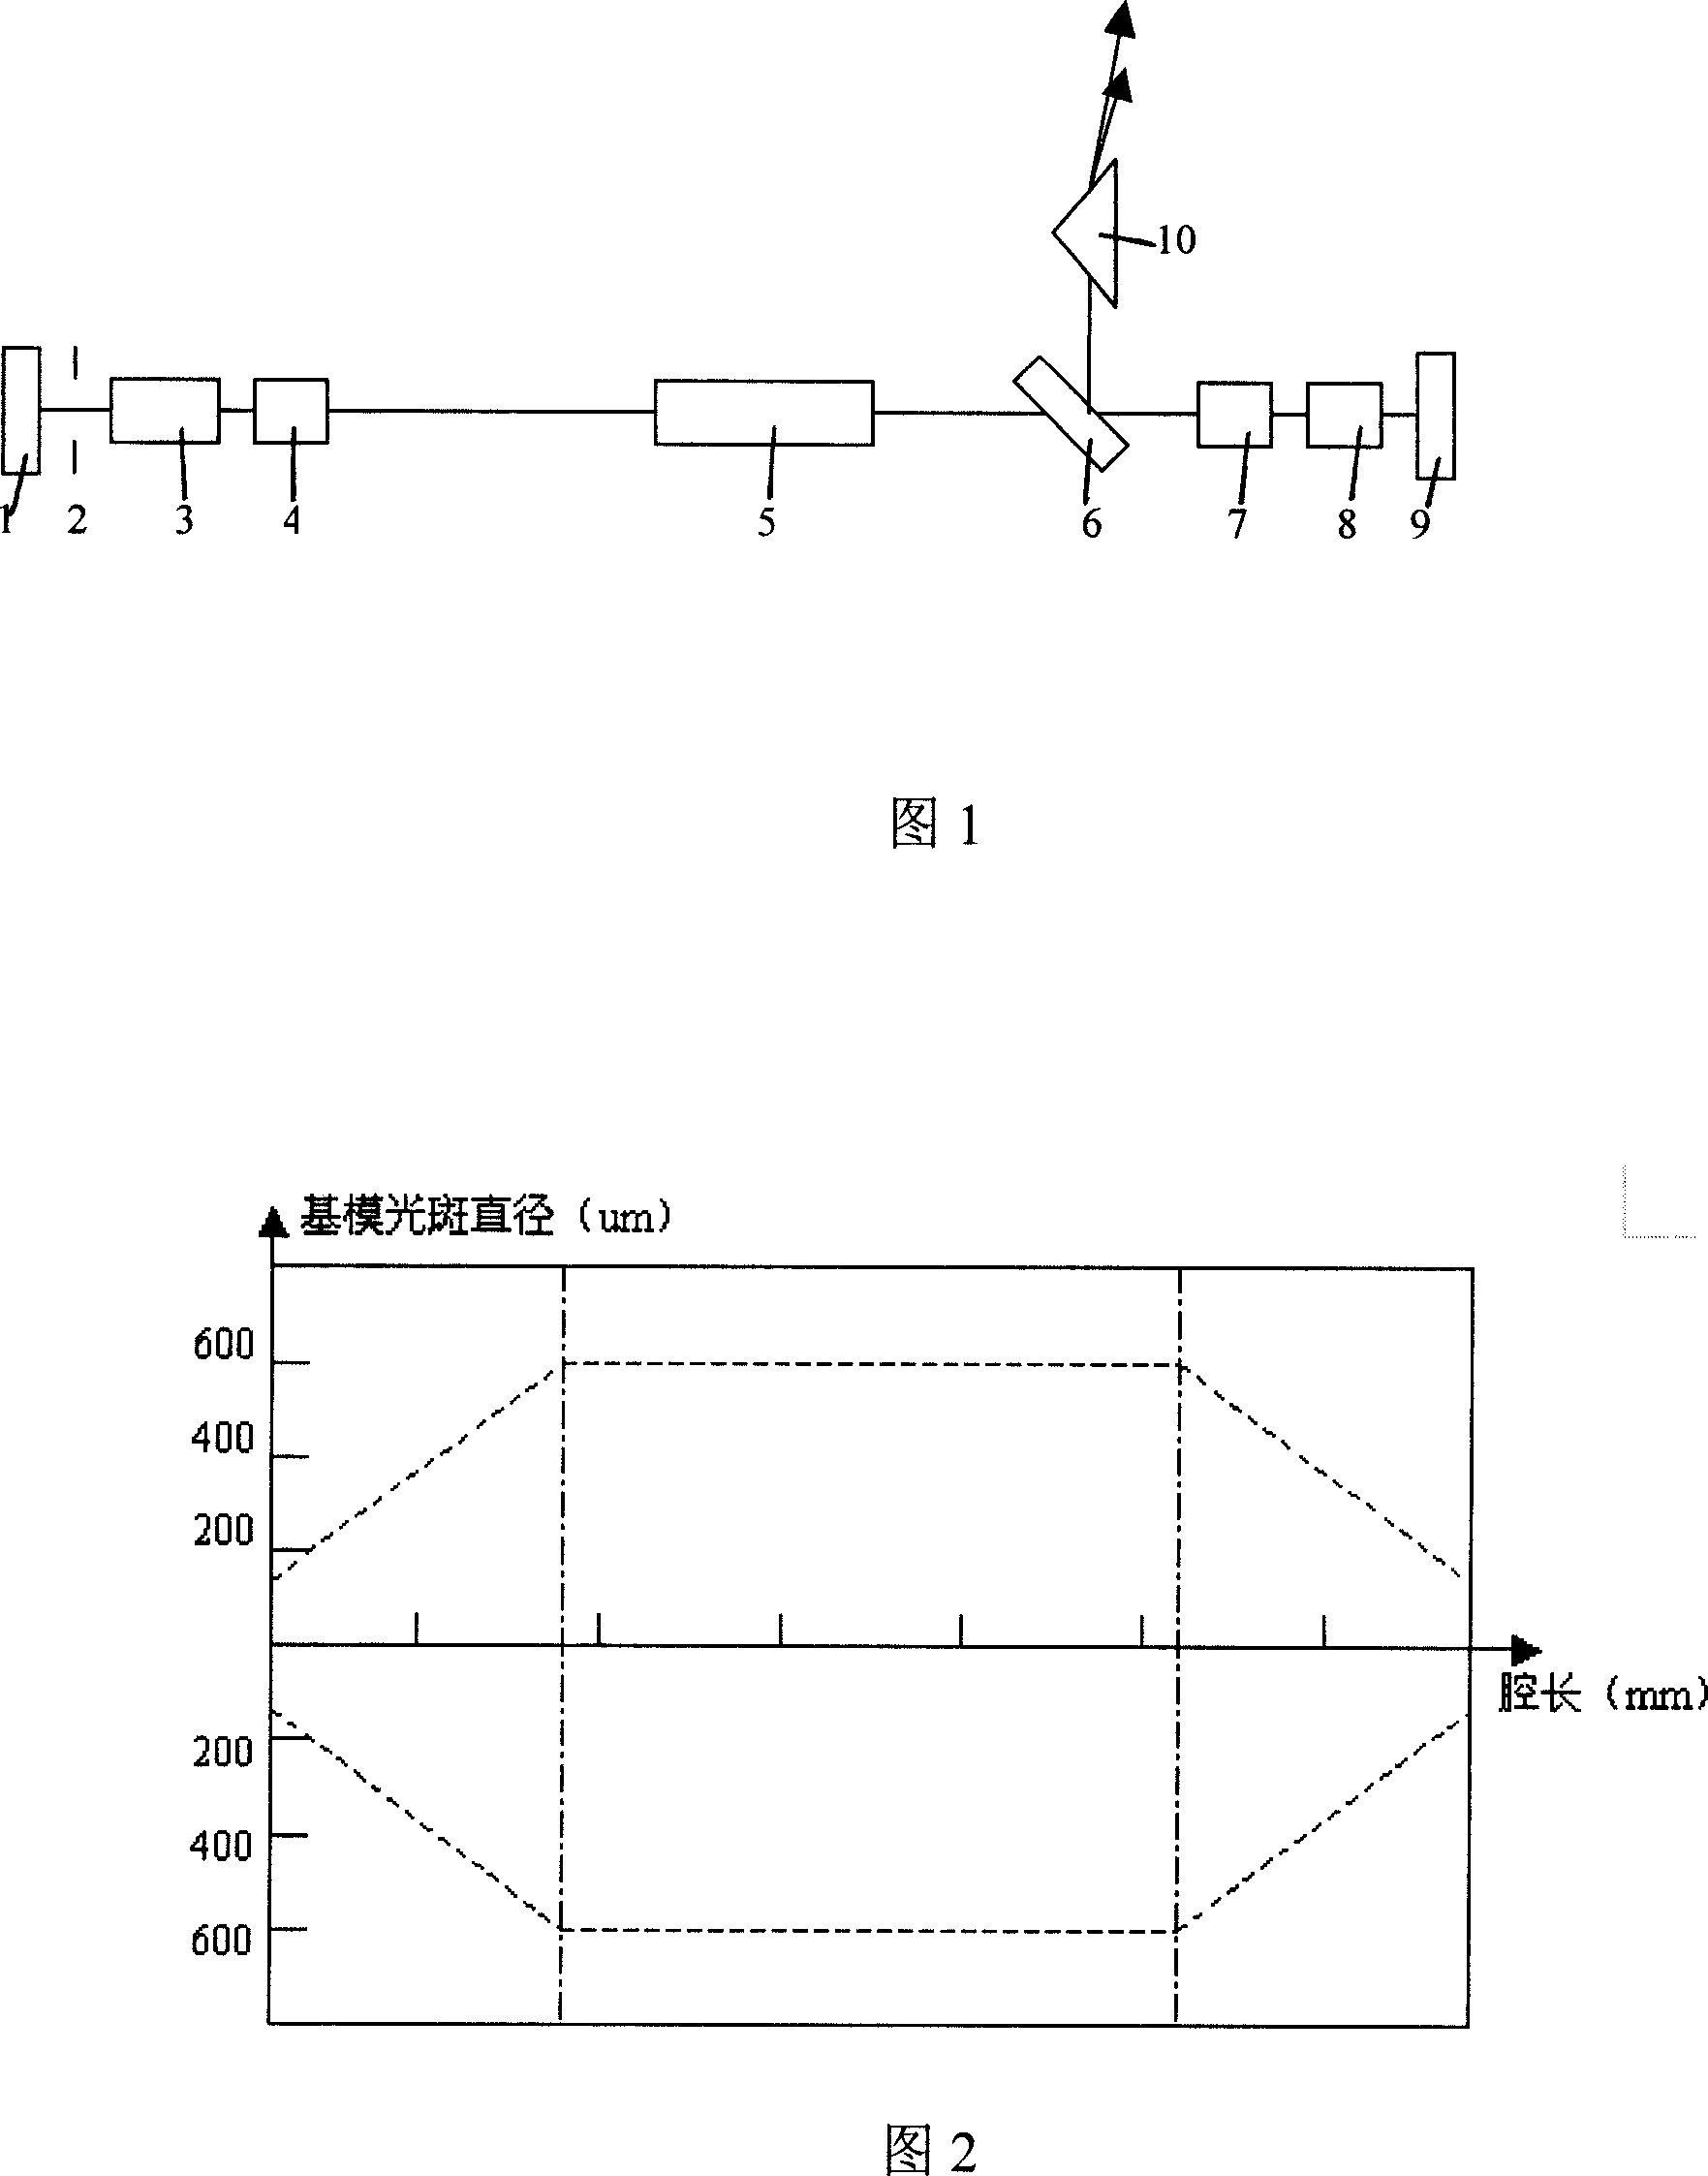 Method for generating third harmonic laser